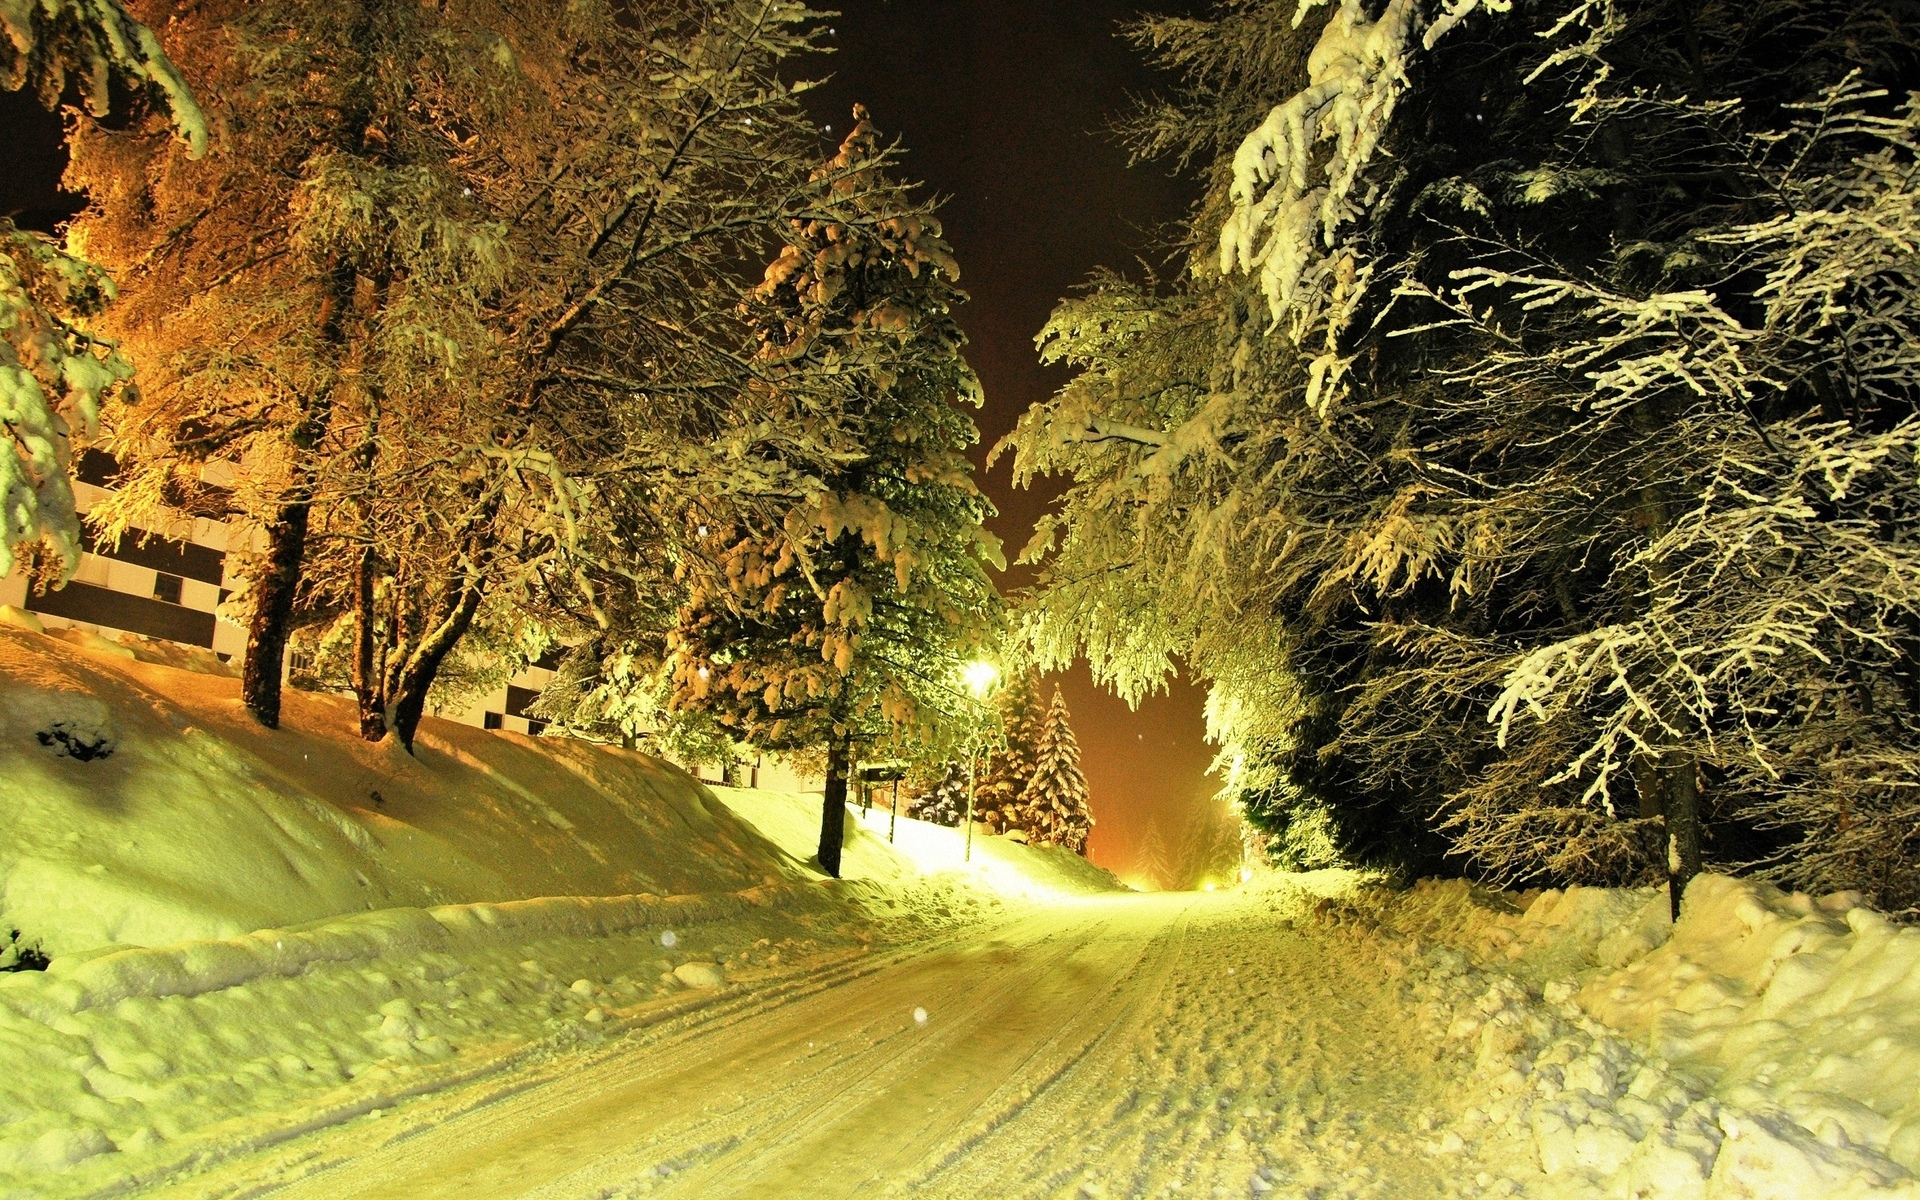 1920x1200 Nature landscapes roads street night light trees winter snow seasons snowing flakes snowfall wallpaper | | 27395